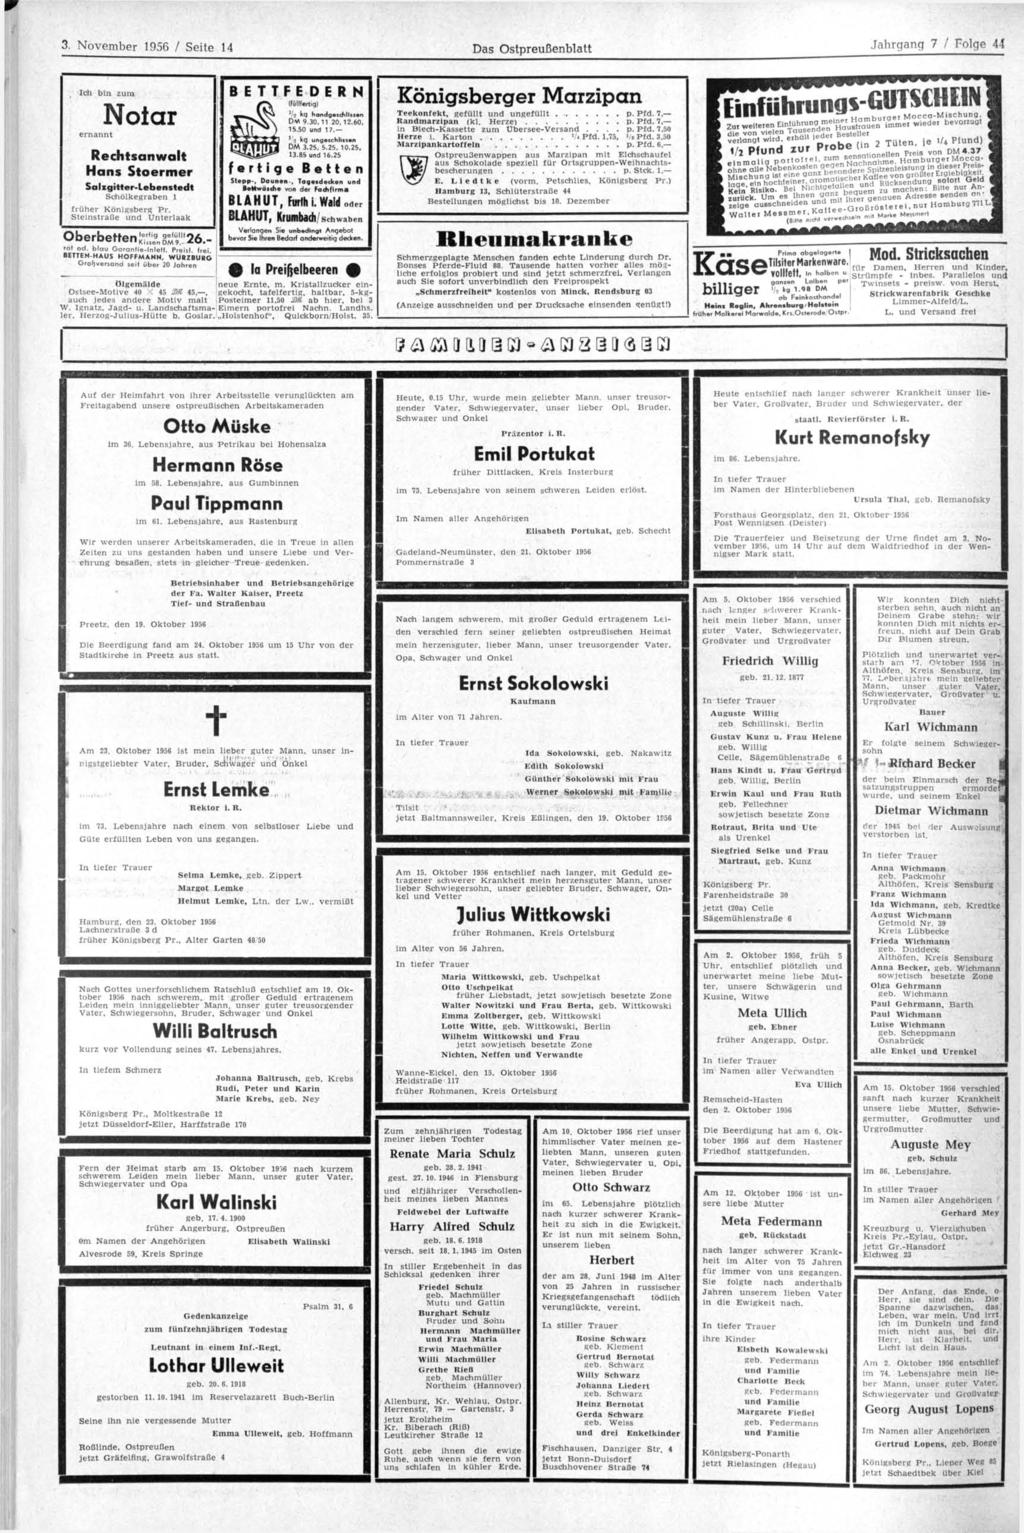 November 1956 Seite 14 Das Ostpreußenblatt Ich bin zum Notar ernannt Rechtsanwalt Hans